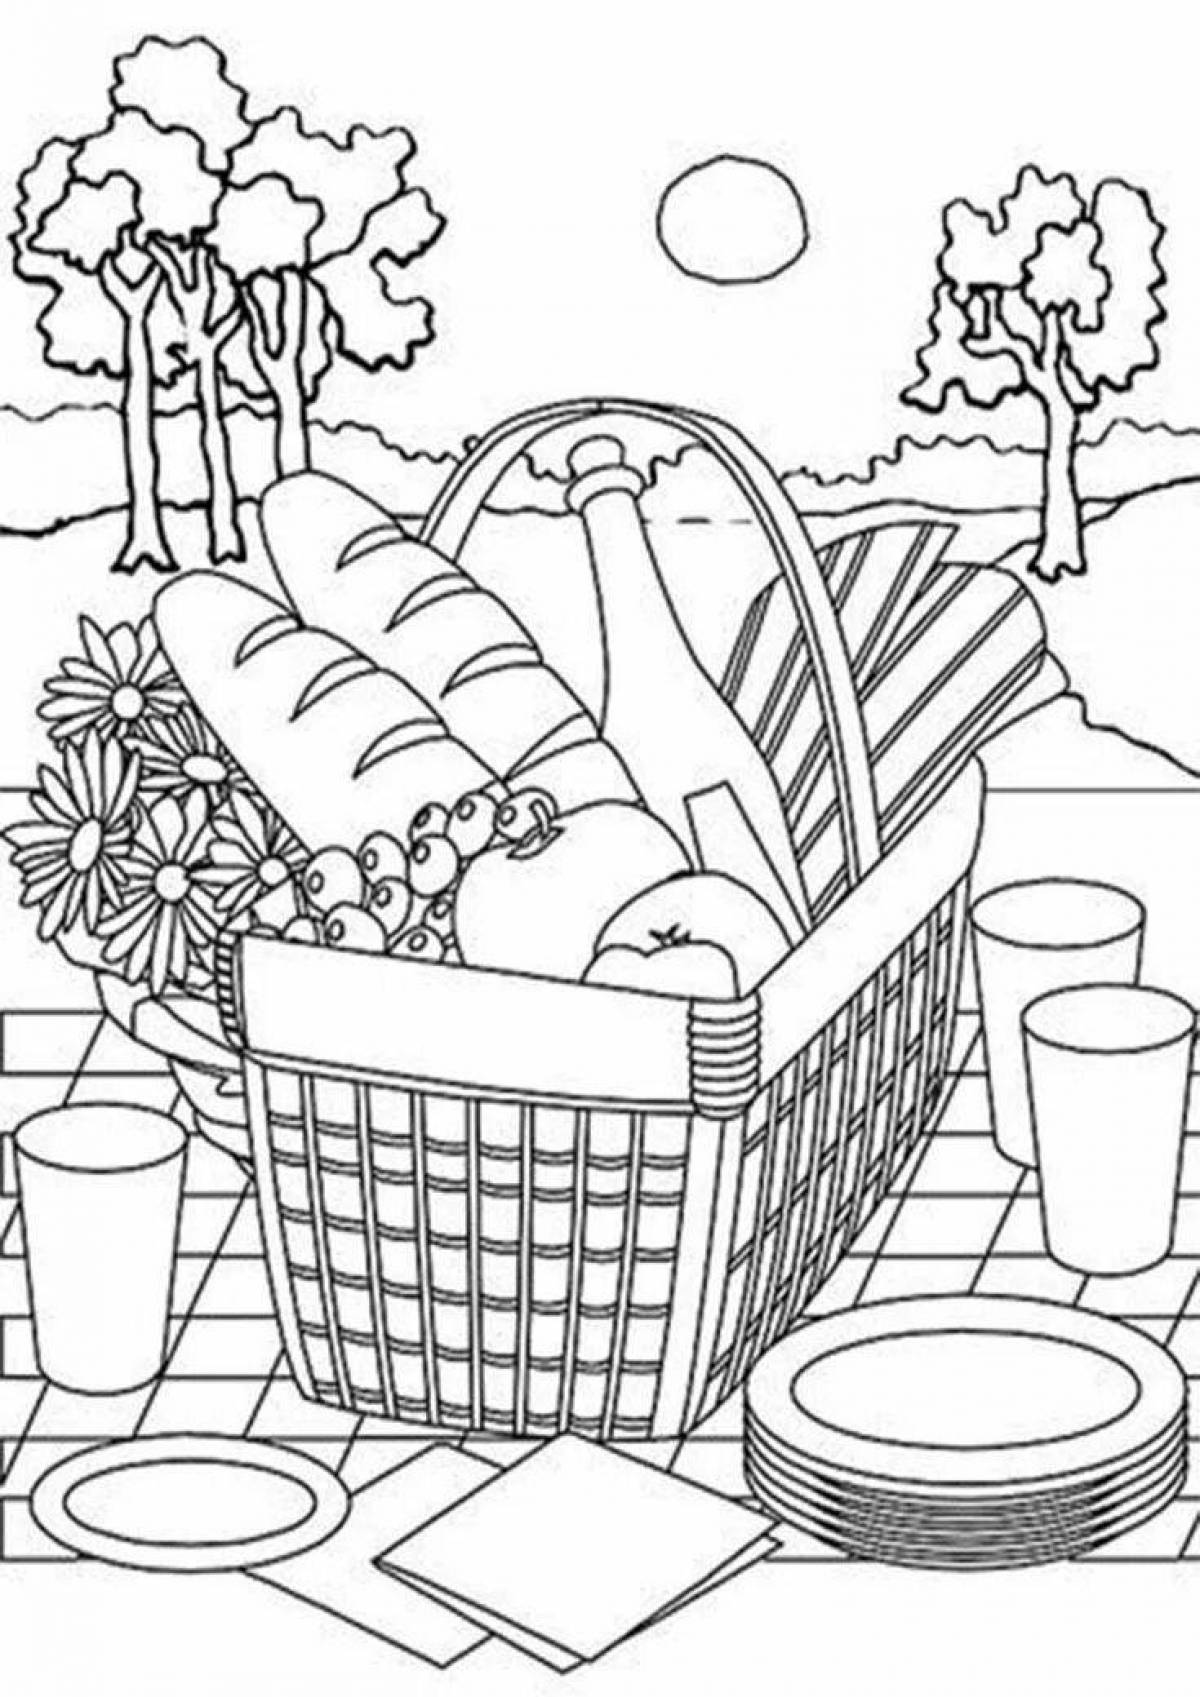 Fun food basket coloring